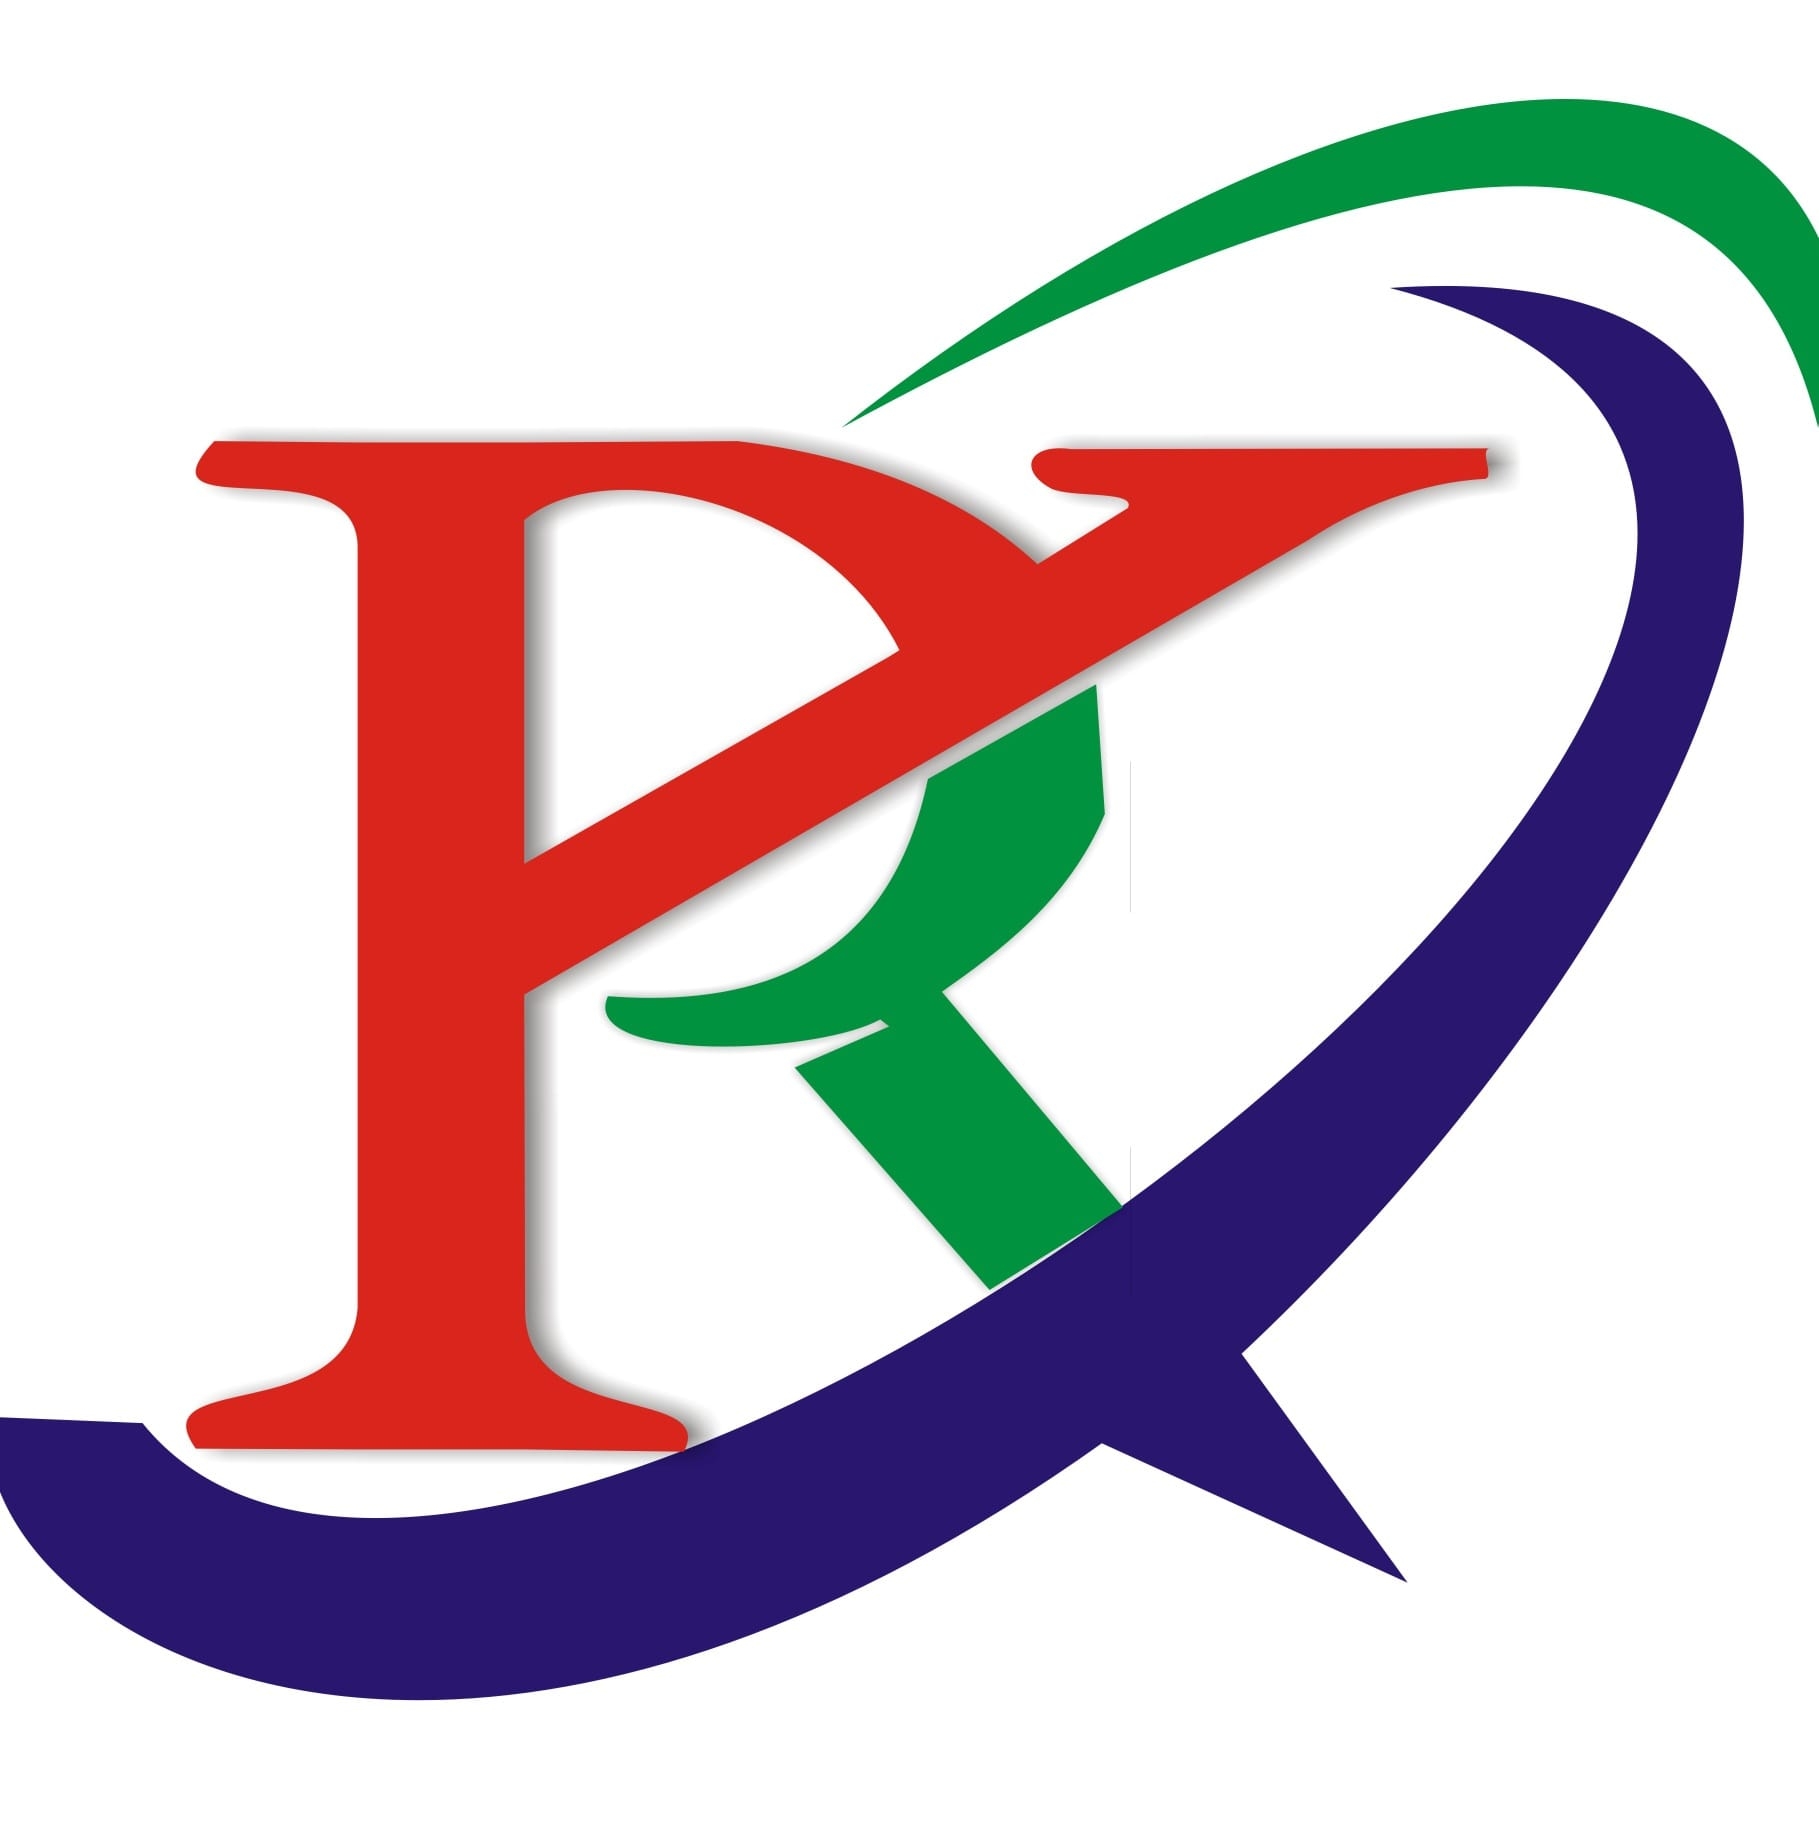 RKP Realty Park PvtLtd|Legal Services|Professional Services